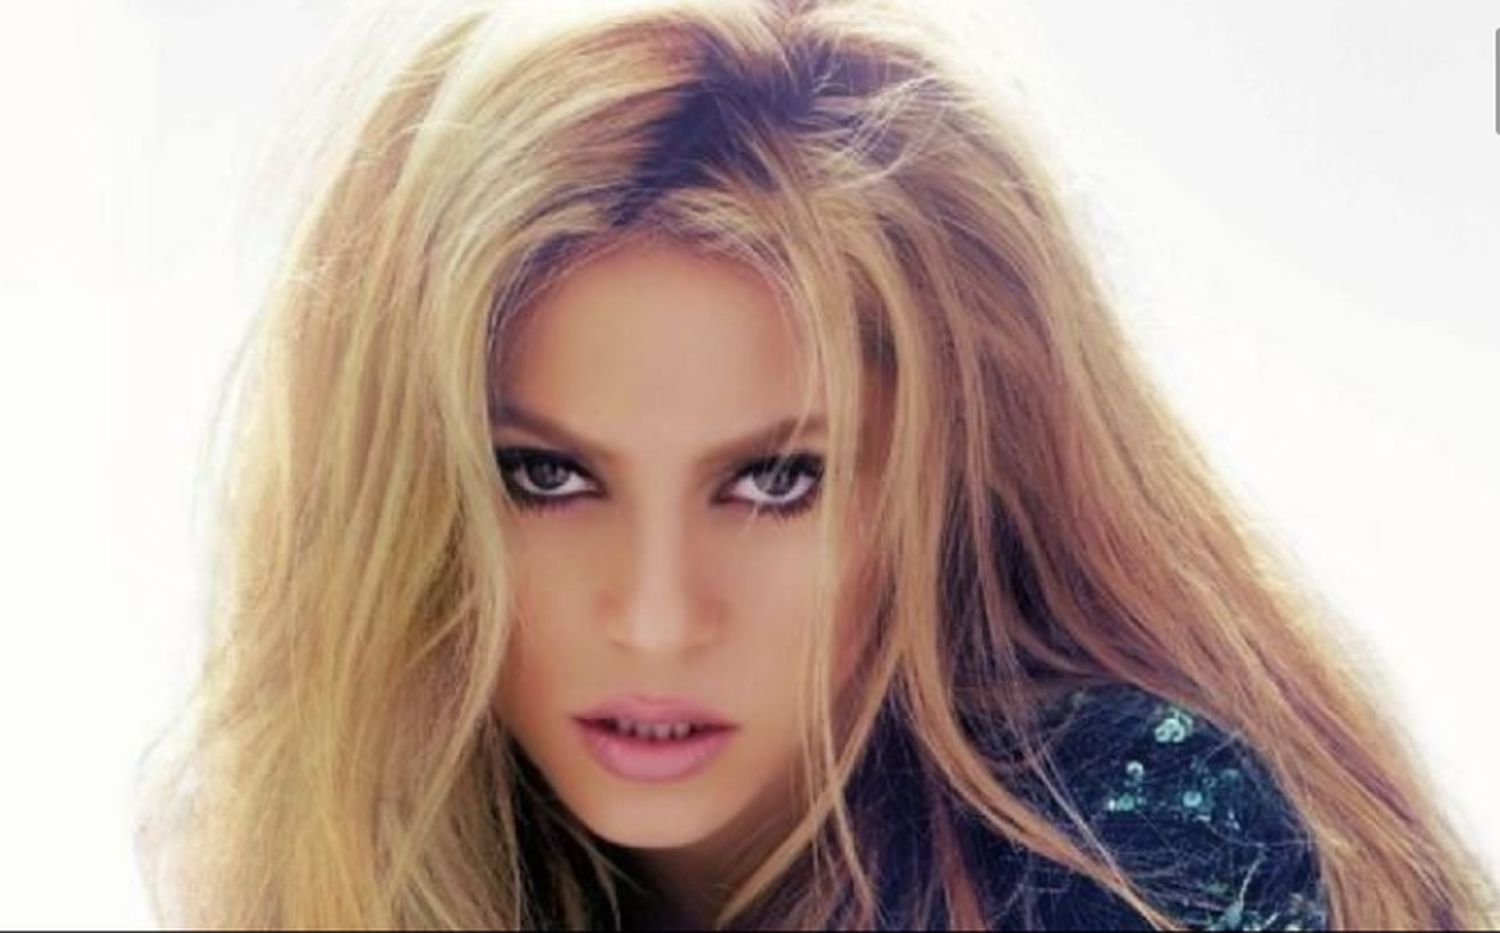 Shakira l-a umilit pe Pique la nivel mondial cu melodia – răzbunare. Acum explică de ce a compus-o